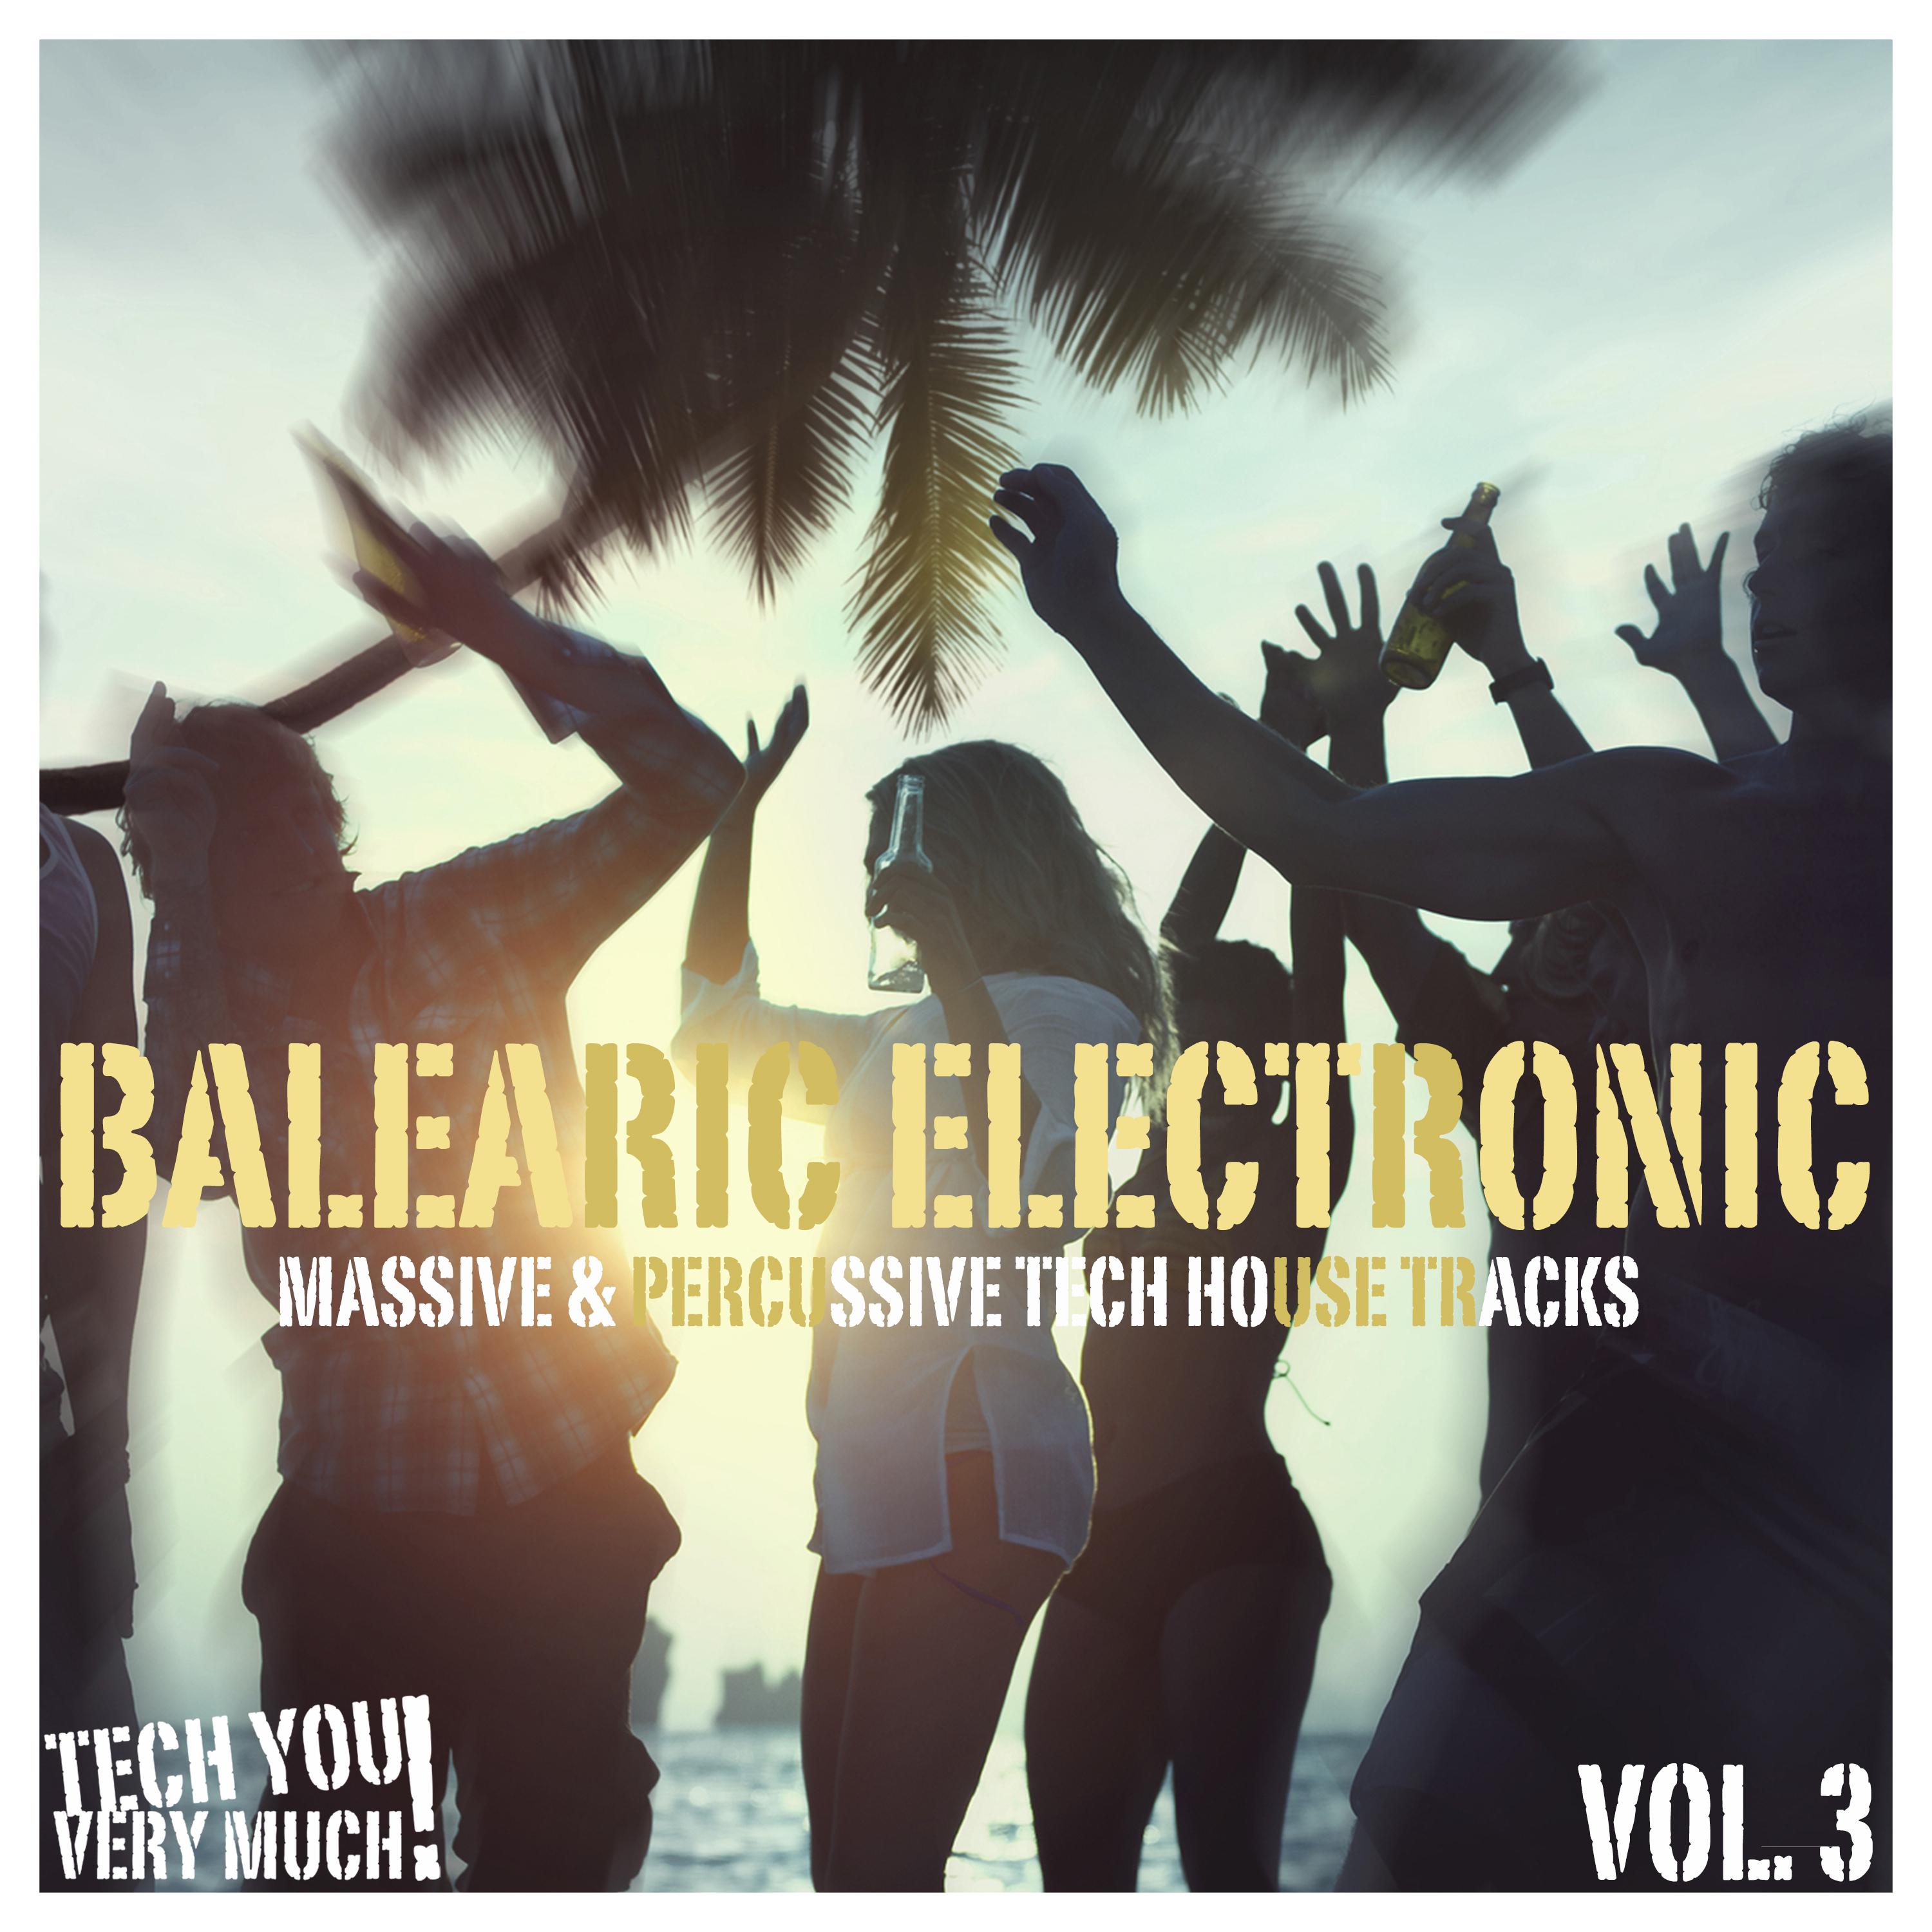 Balearic Electronic, Vol. 3 (Massive & Percussive Tech House Tracks)